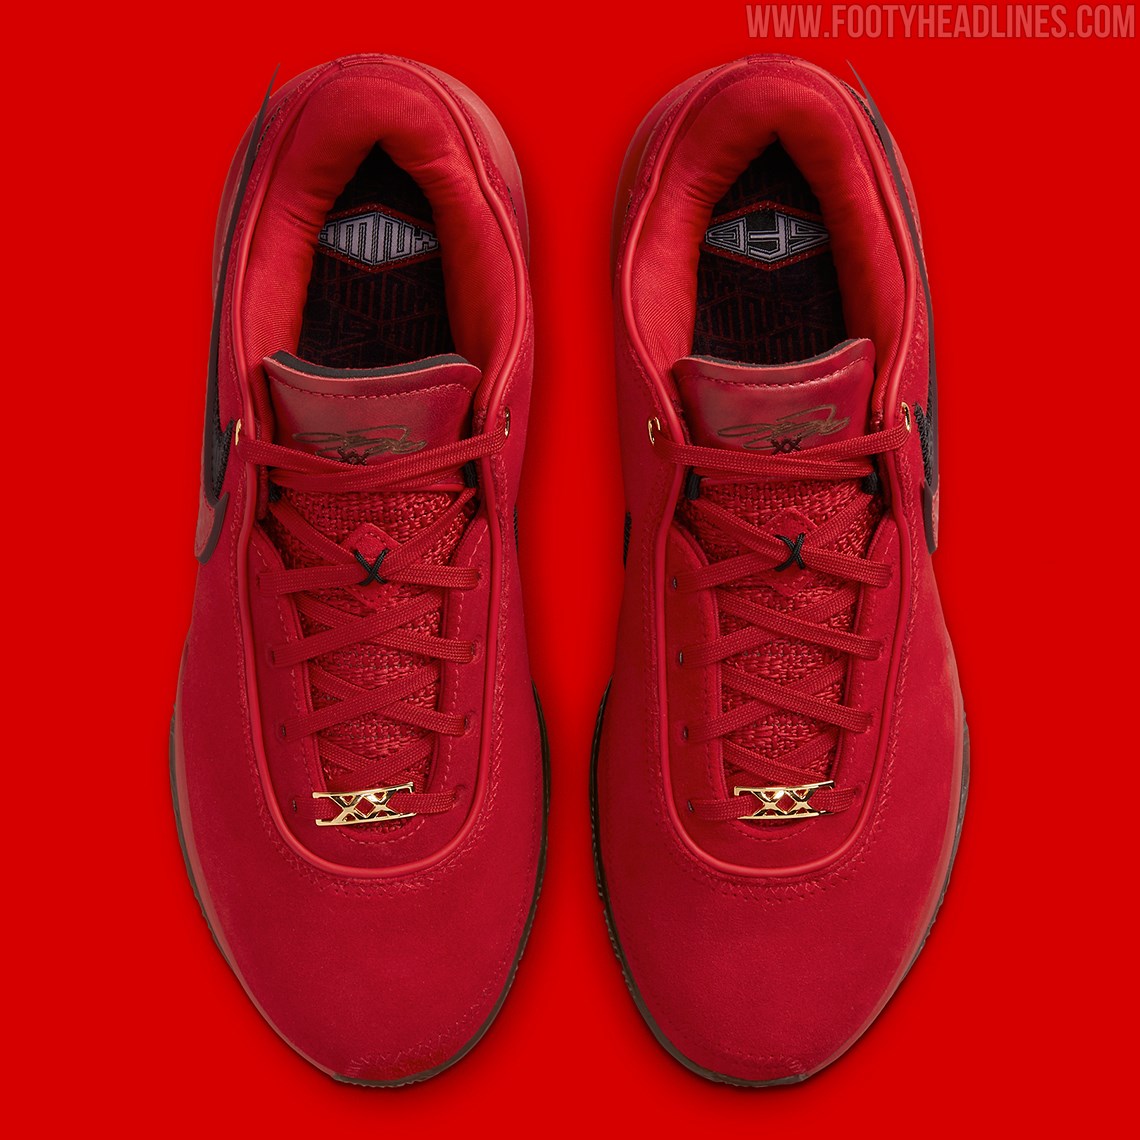 Better Than the Leak? Nike x LeBron James Liverpool 22-23 Concept Kit -  Footy Headlines